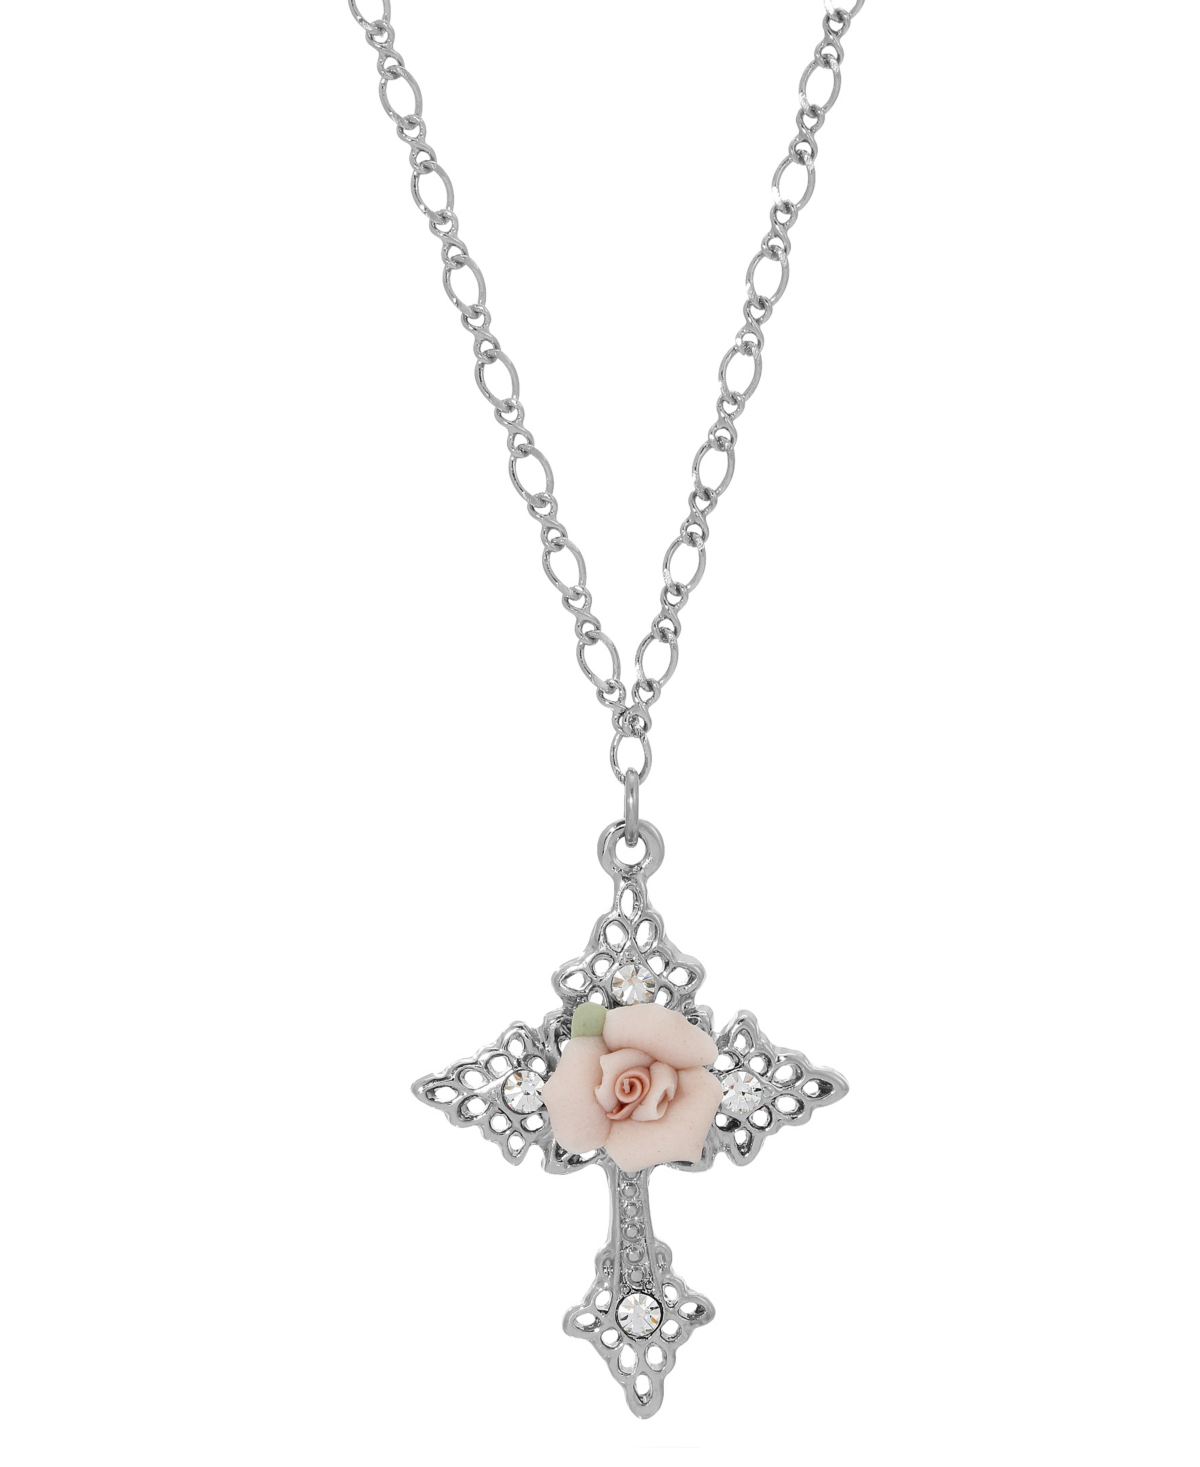 Silver-Tone Crystal Porcelain Rose Cross Pendant Necklace - Pink